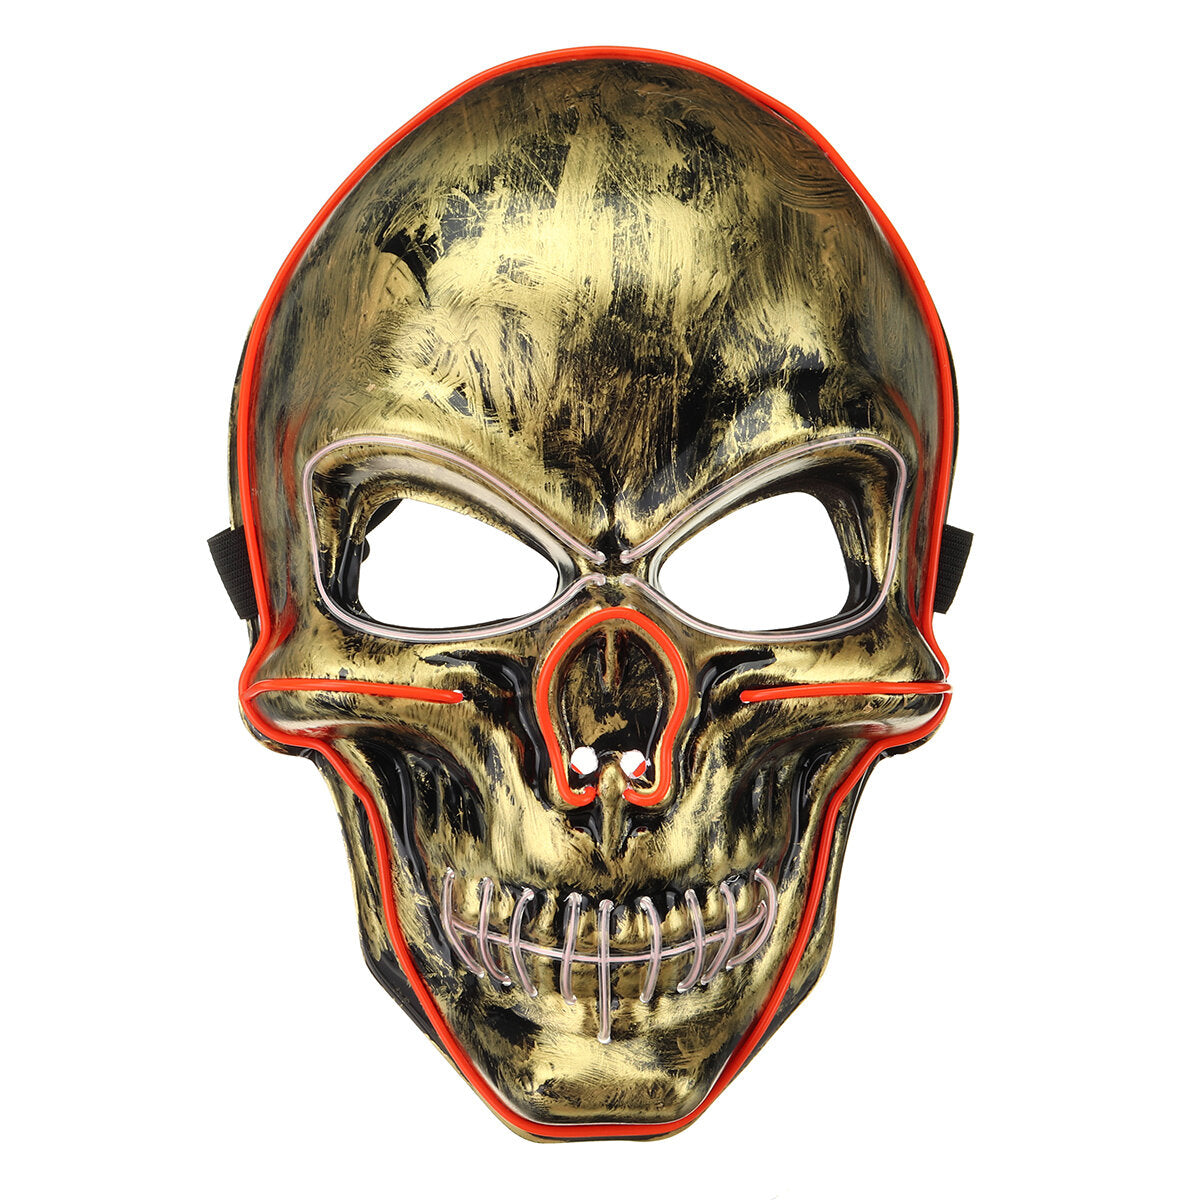 skeletmasker el wire light up skull mask voor halloween-kostuumaccessoire